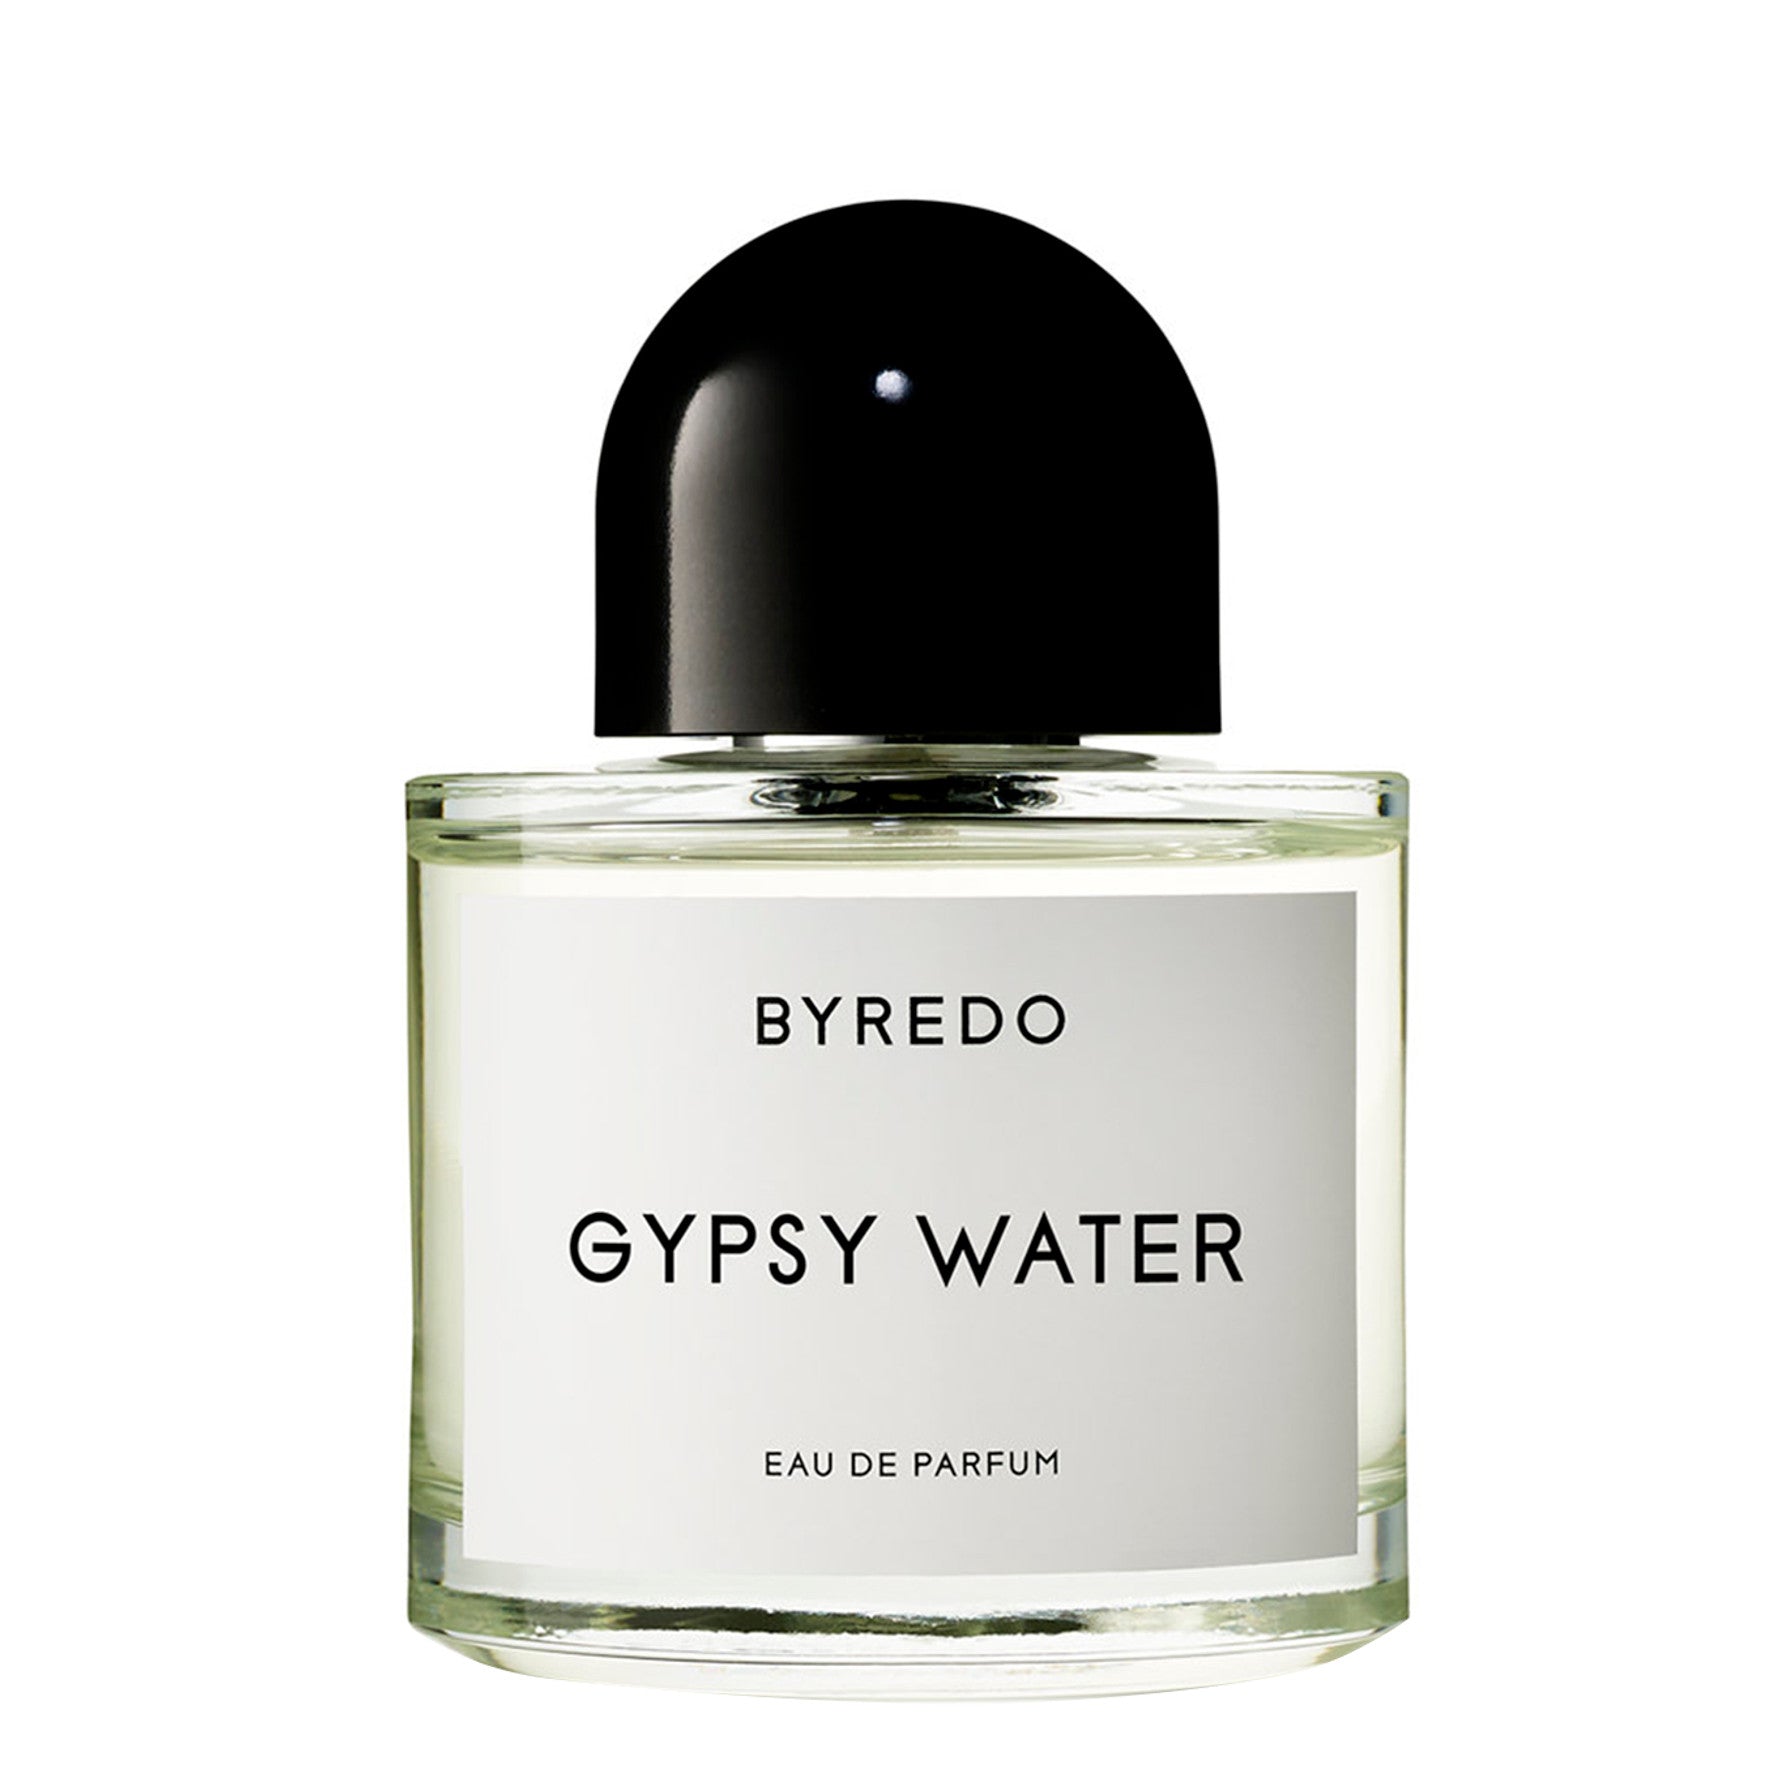 Byredo - “Gypsy Water” Eau de Parfum 100ml view 1